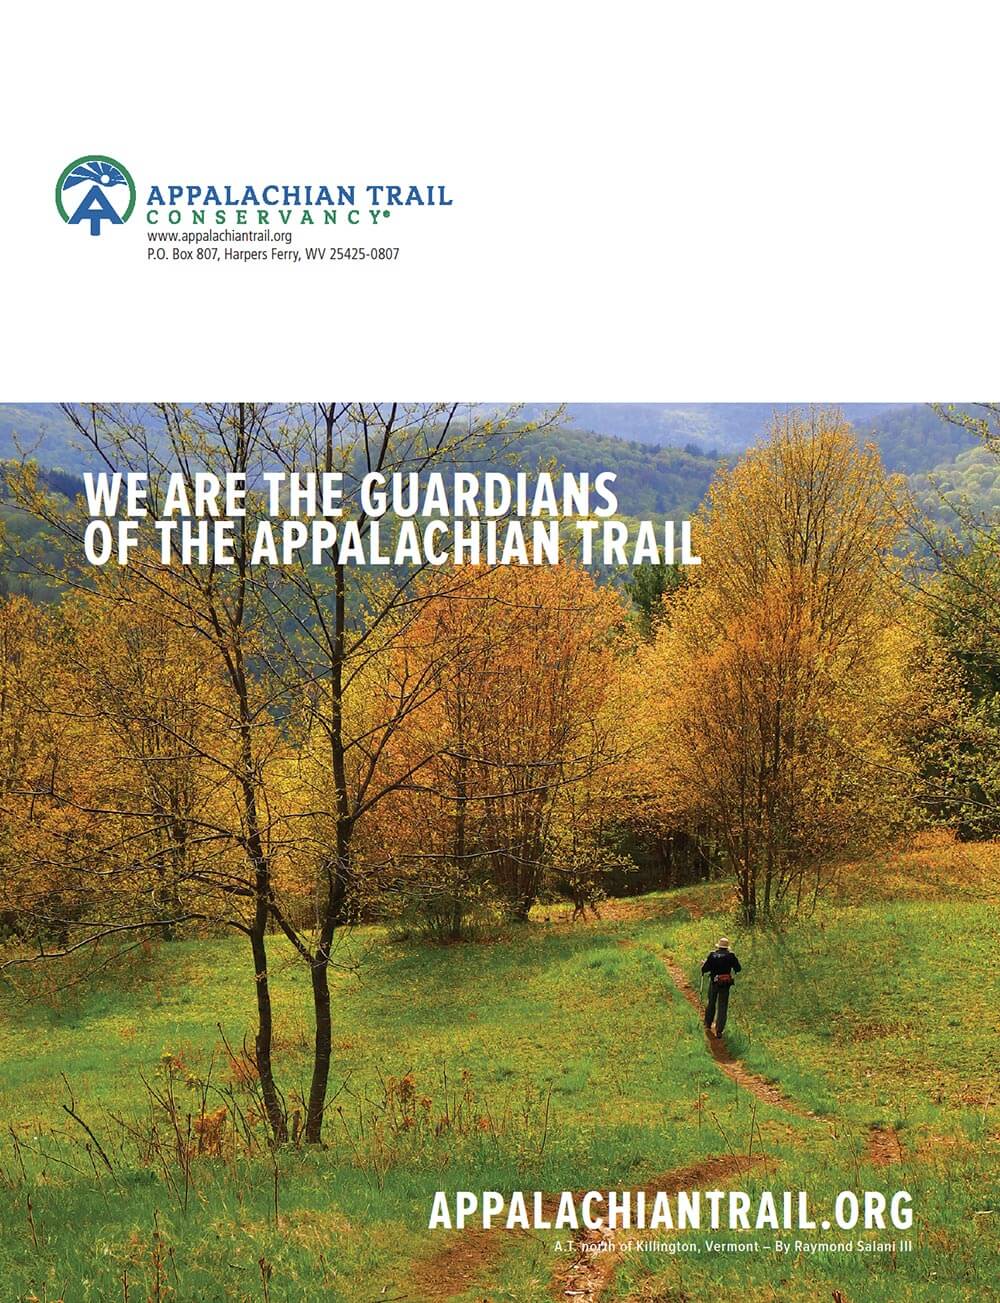 Appalachian Trail Advertisement